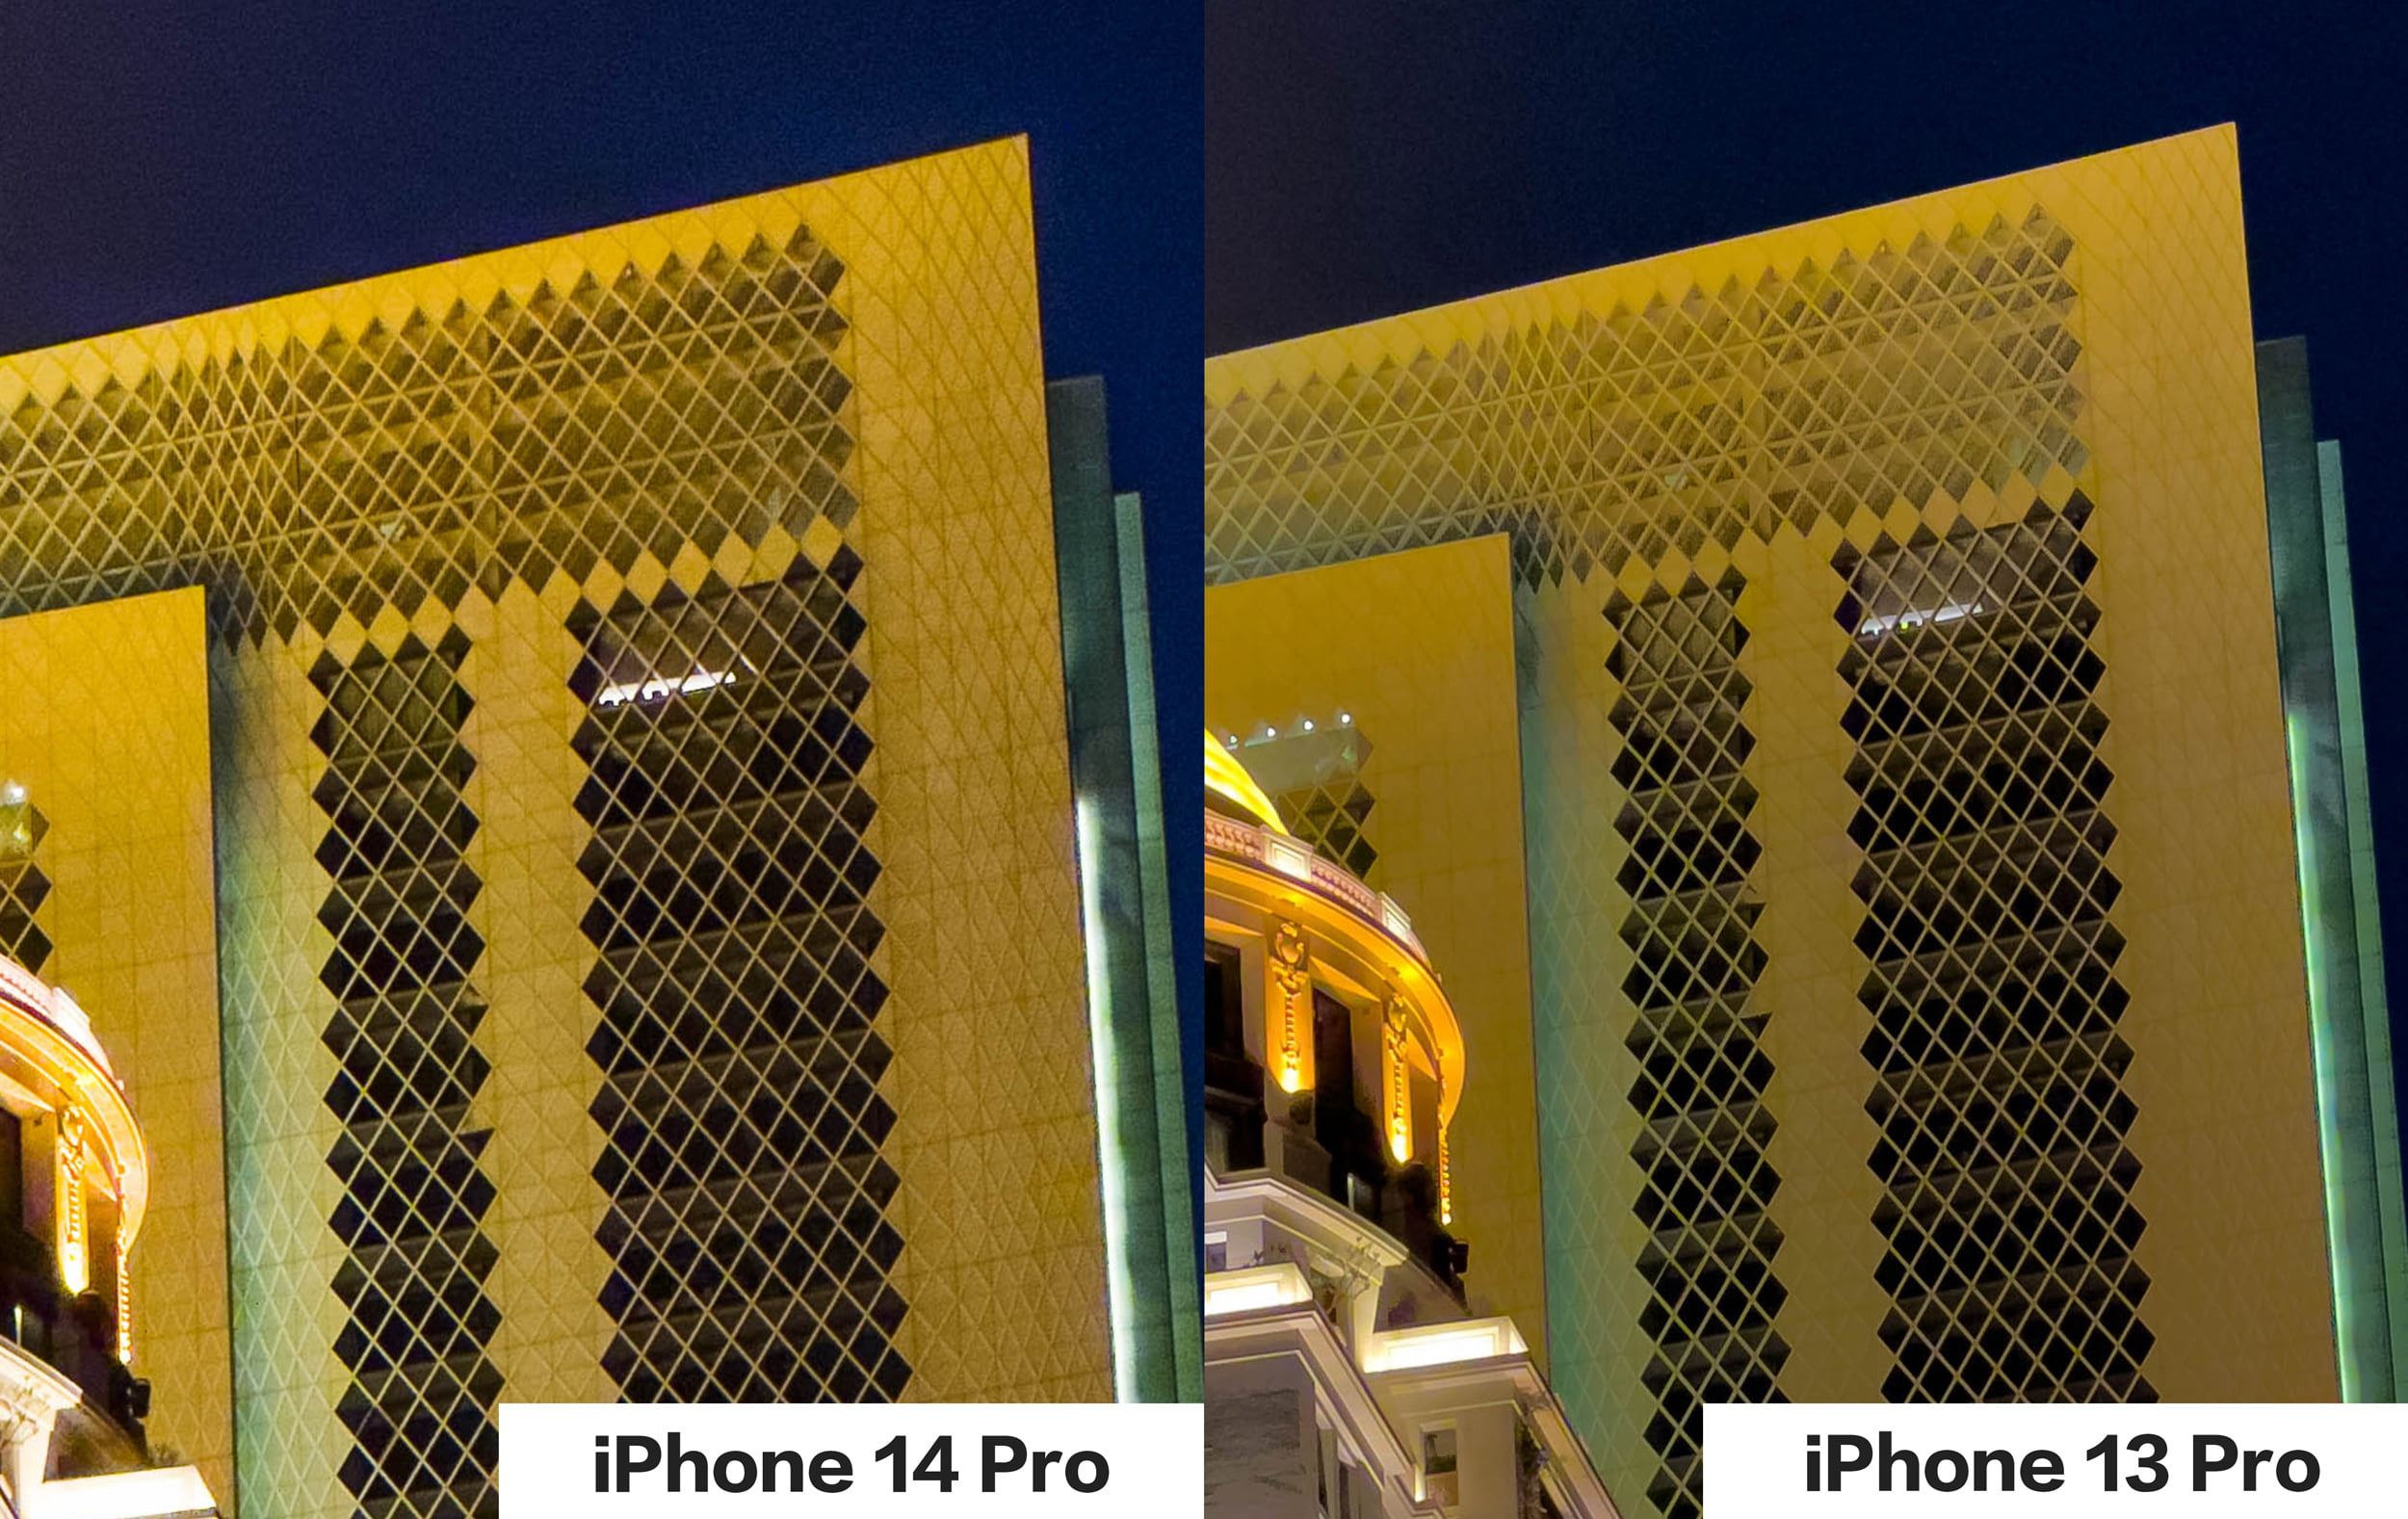 iphone 14 pro night shot comparison 19